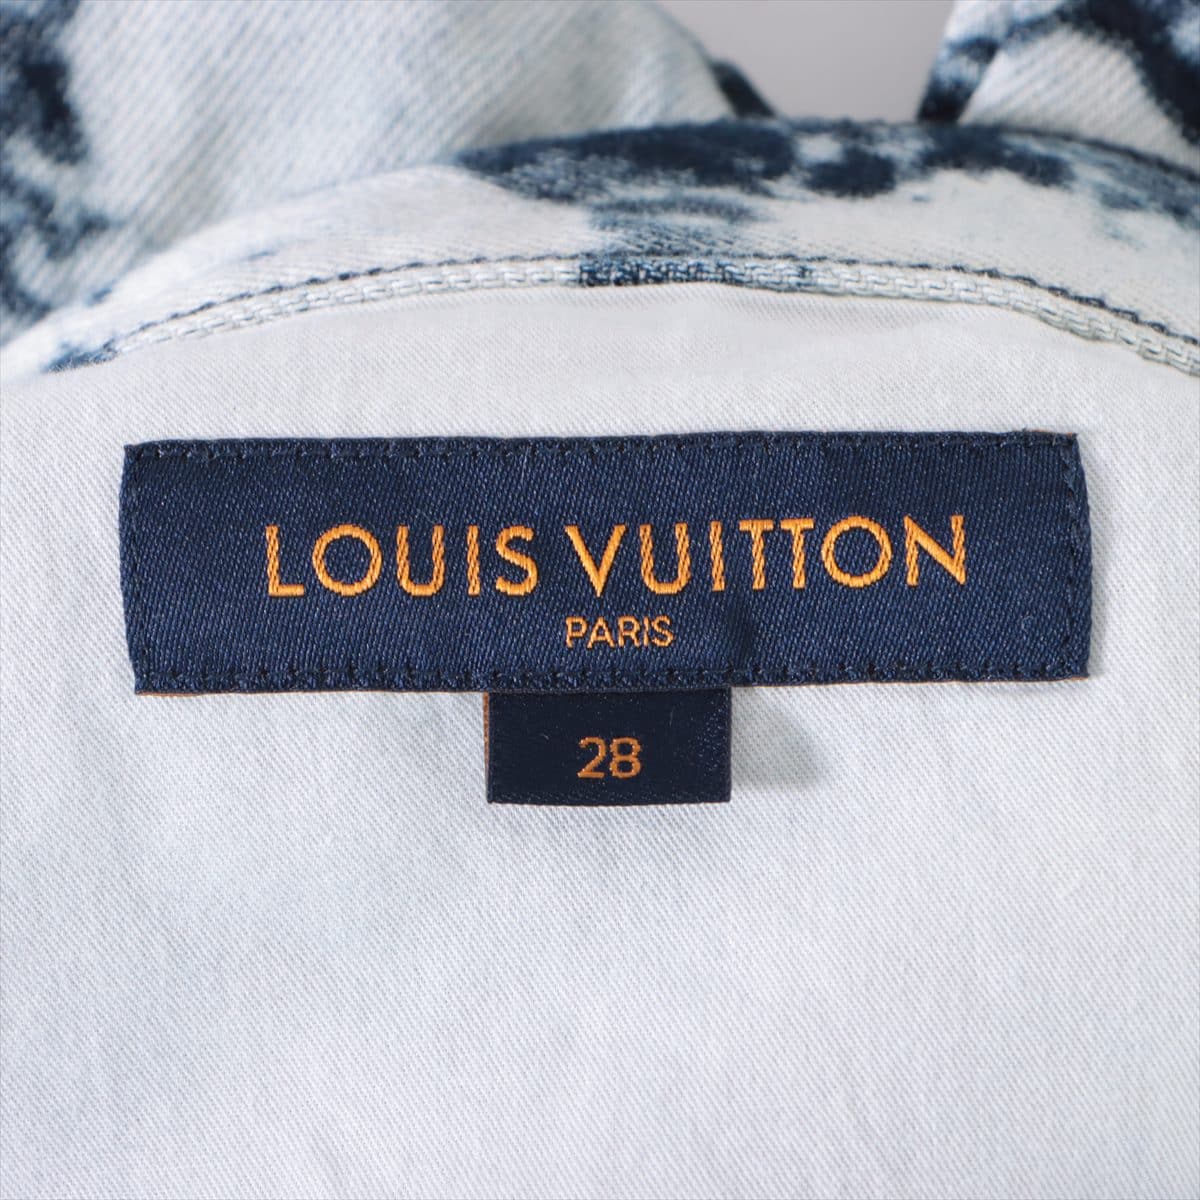 Louis Vuitton 19SS Cotton Denim pants 28 Men's Blue x white  Poppy Dorothy